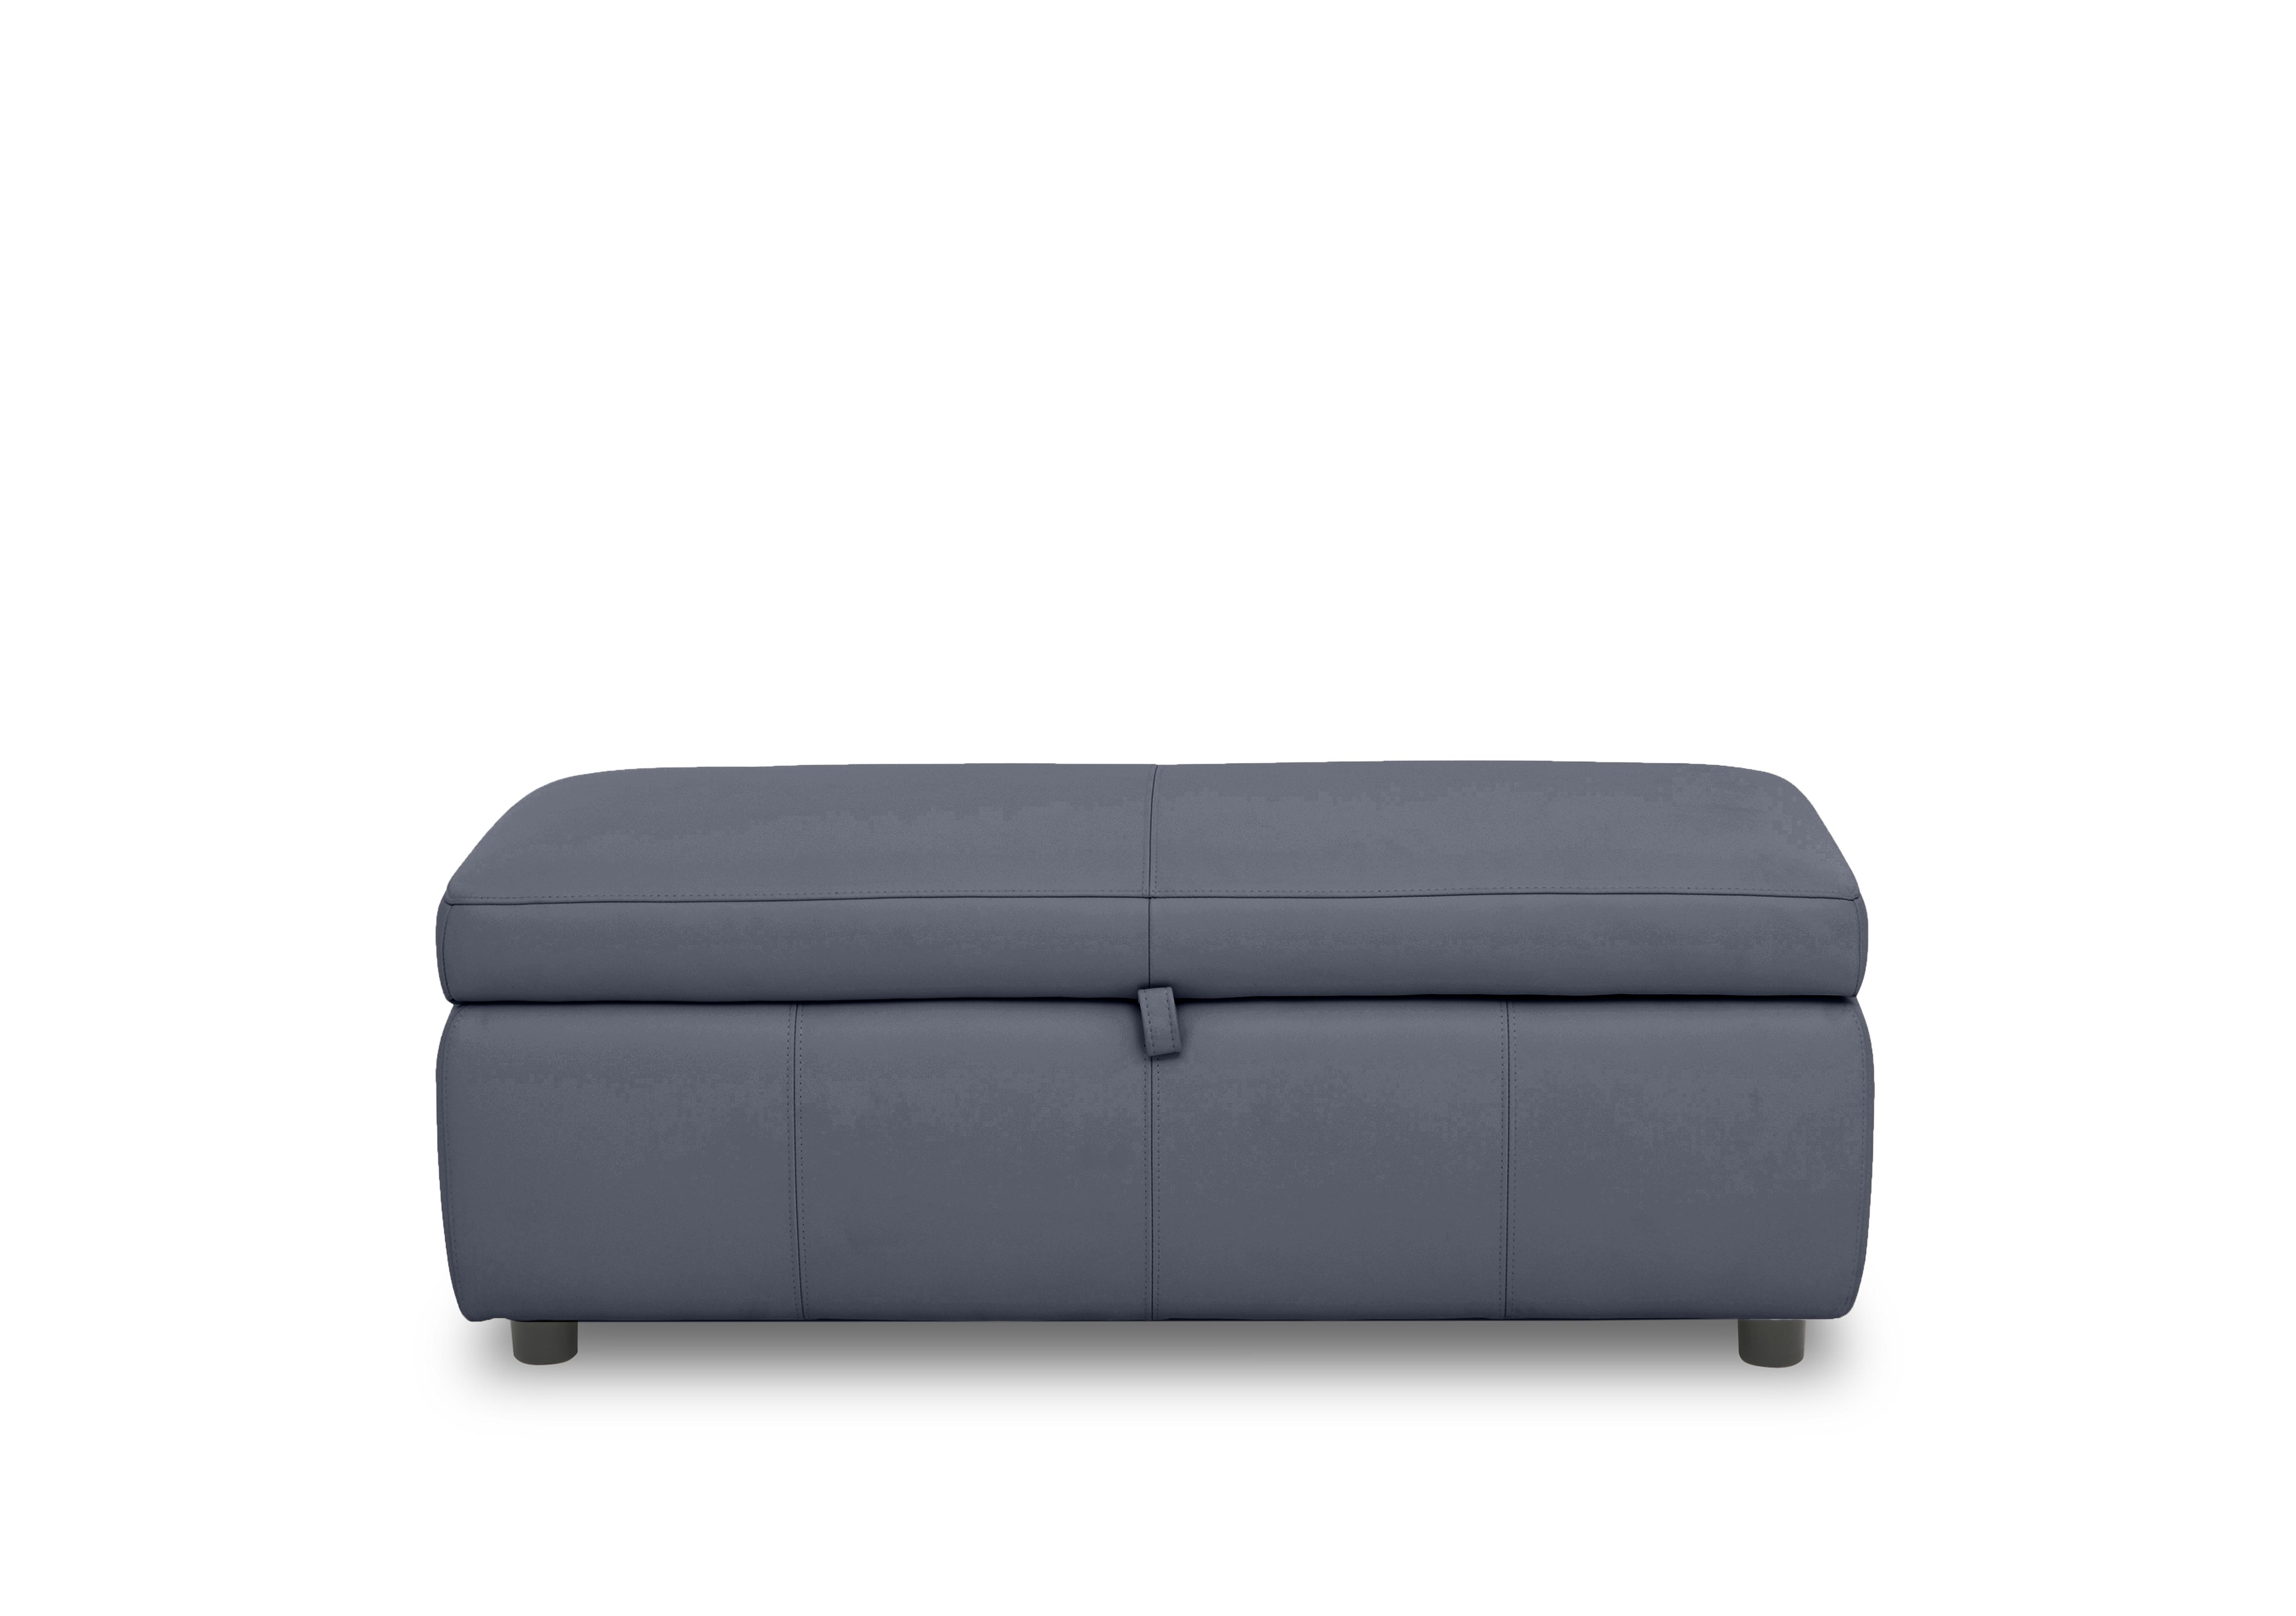 Tyrell 120cm Leather Blanket Box in Bv-313e Ocean Blue on Furniture Village